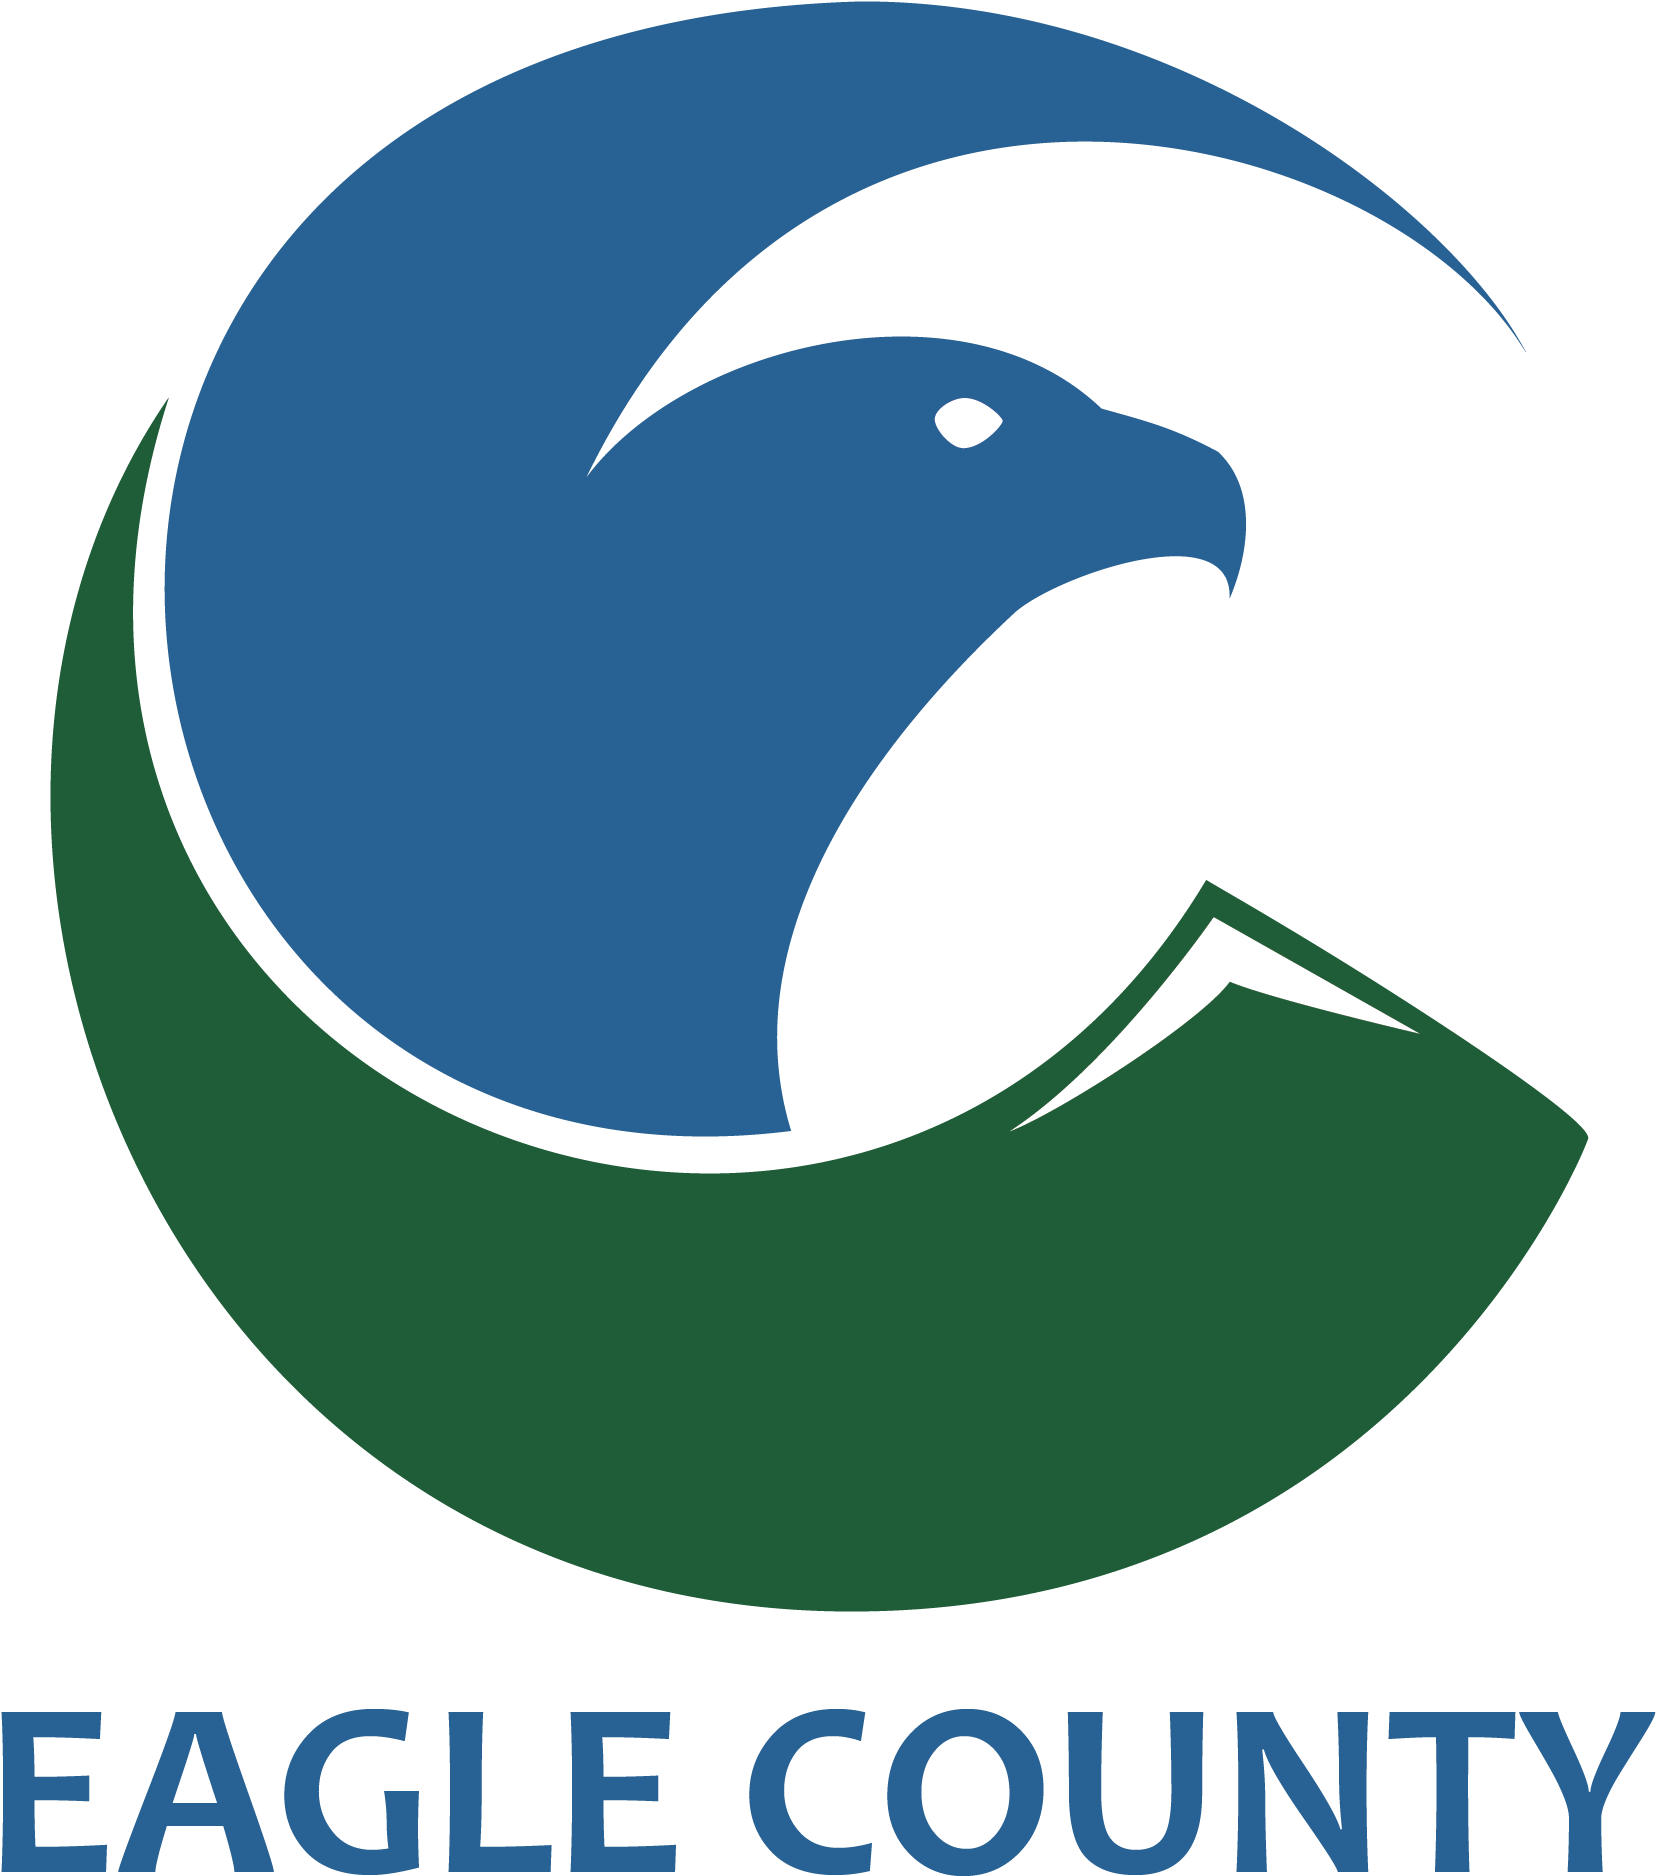 Eagle County Final Logo - Eagle County Government (1673x1941)